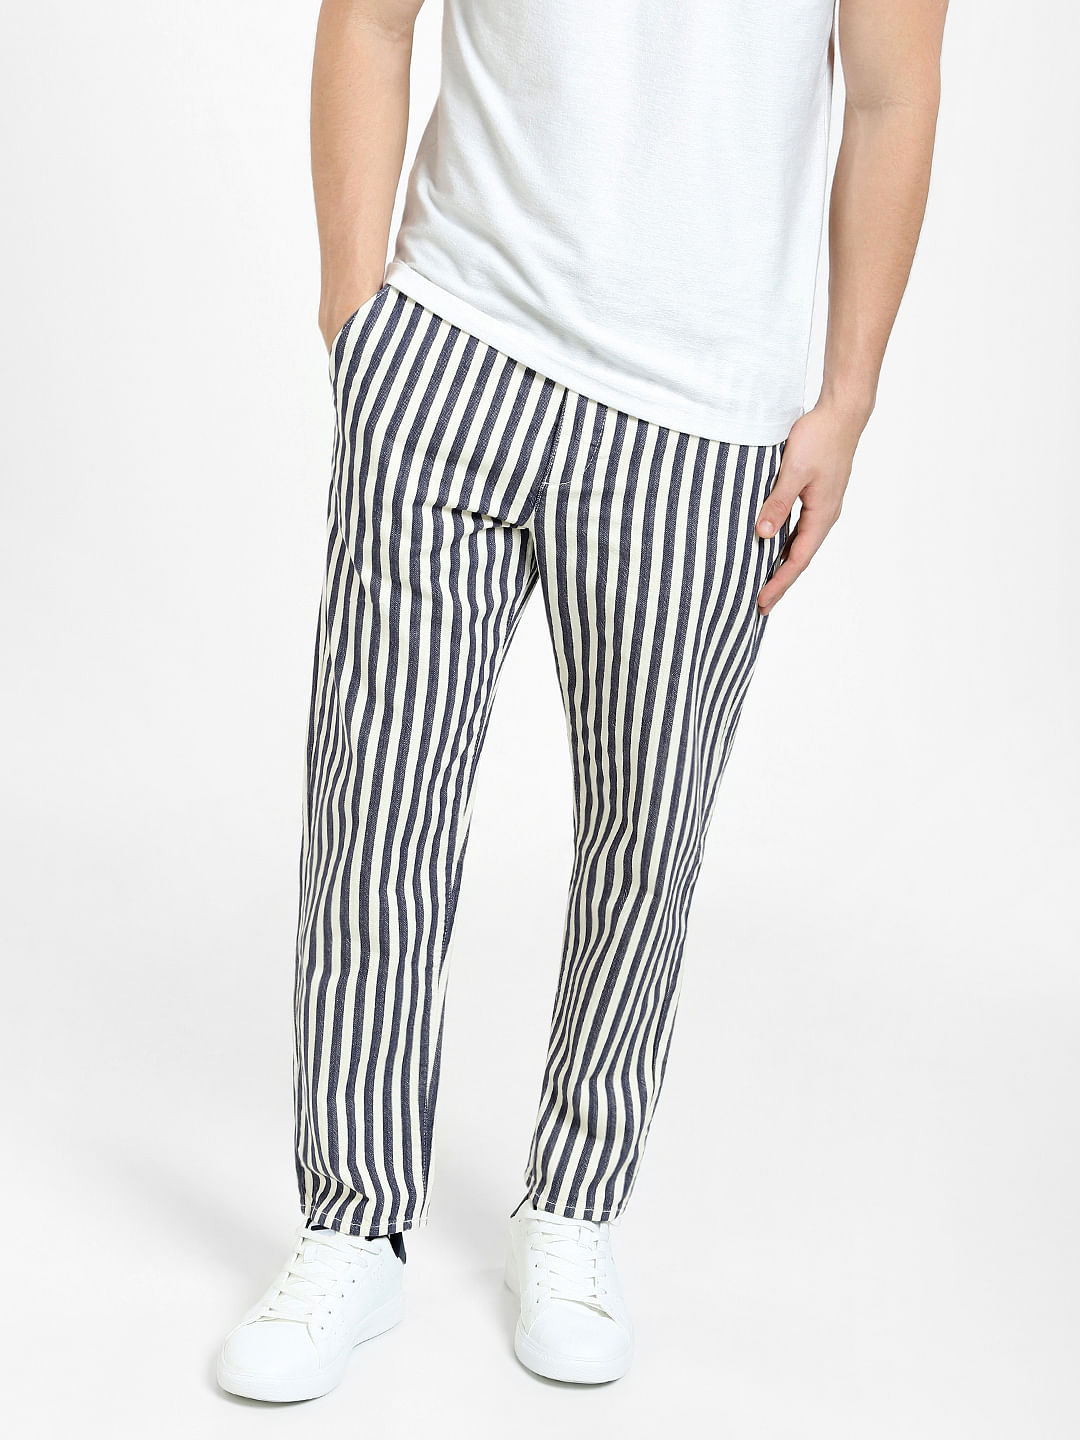 PullBear tapered trouser in black and white stripe  ASOS